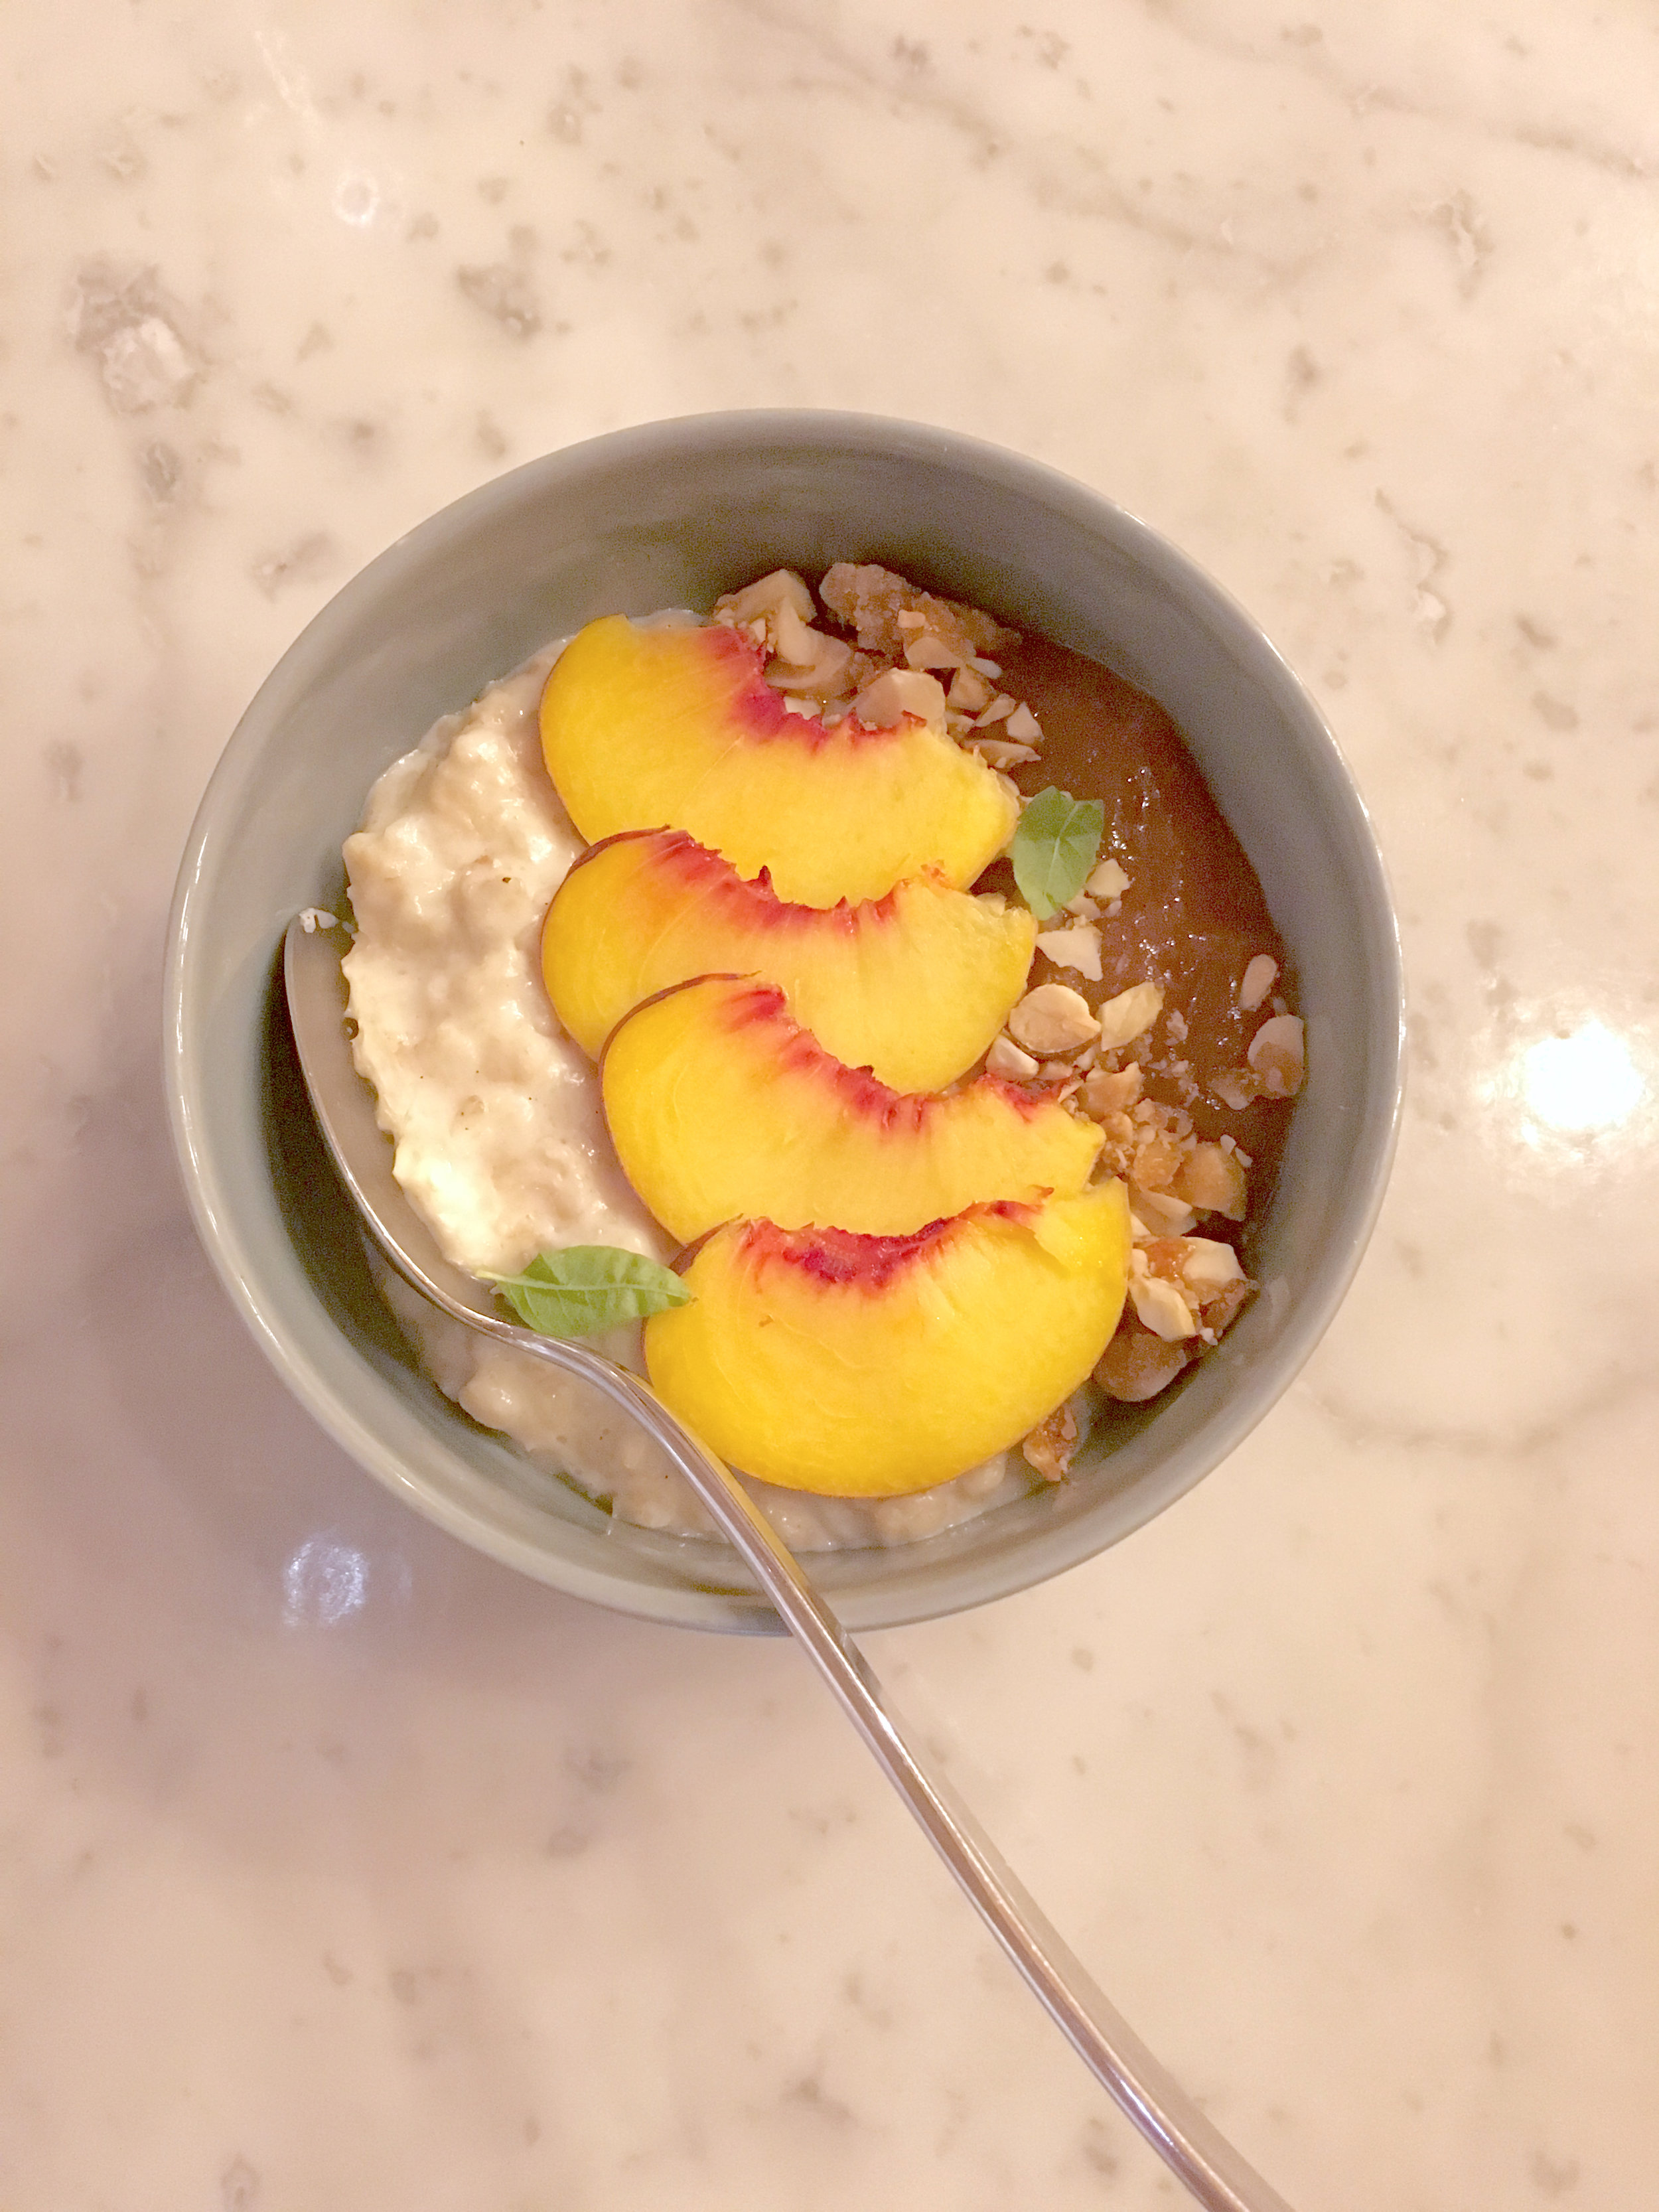 Oat porridge with peaches and peaches compôte